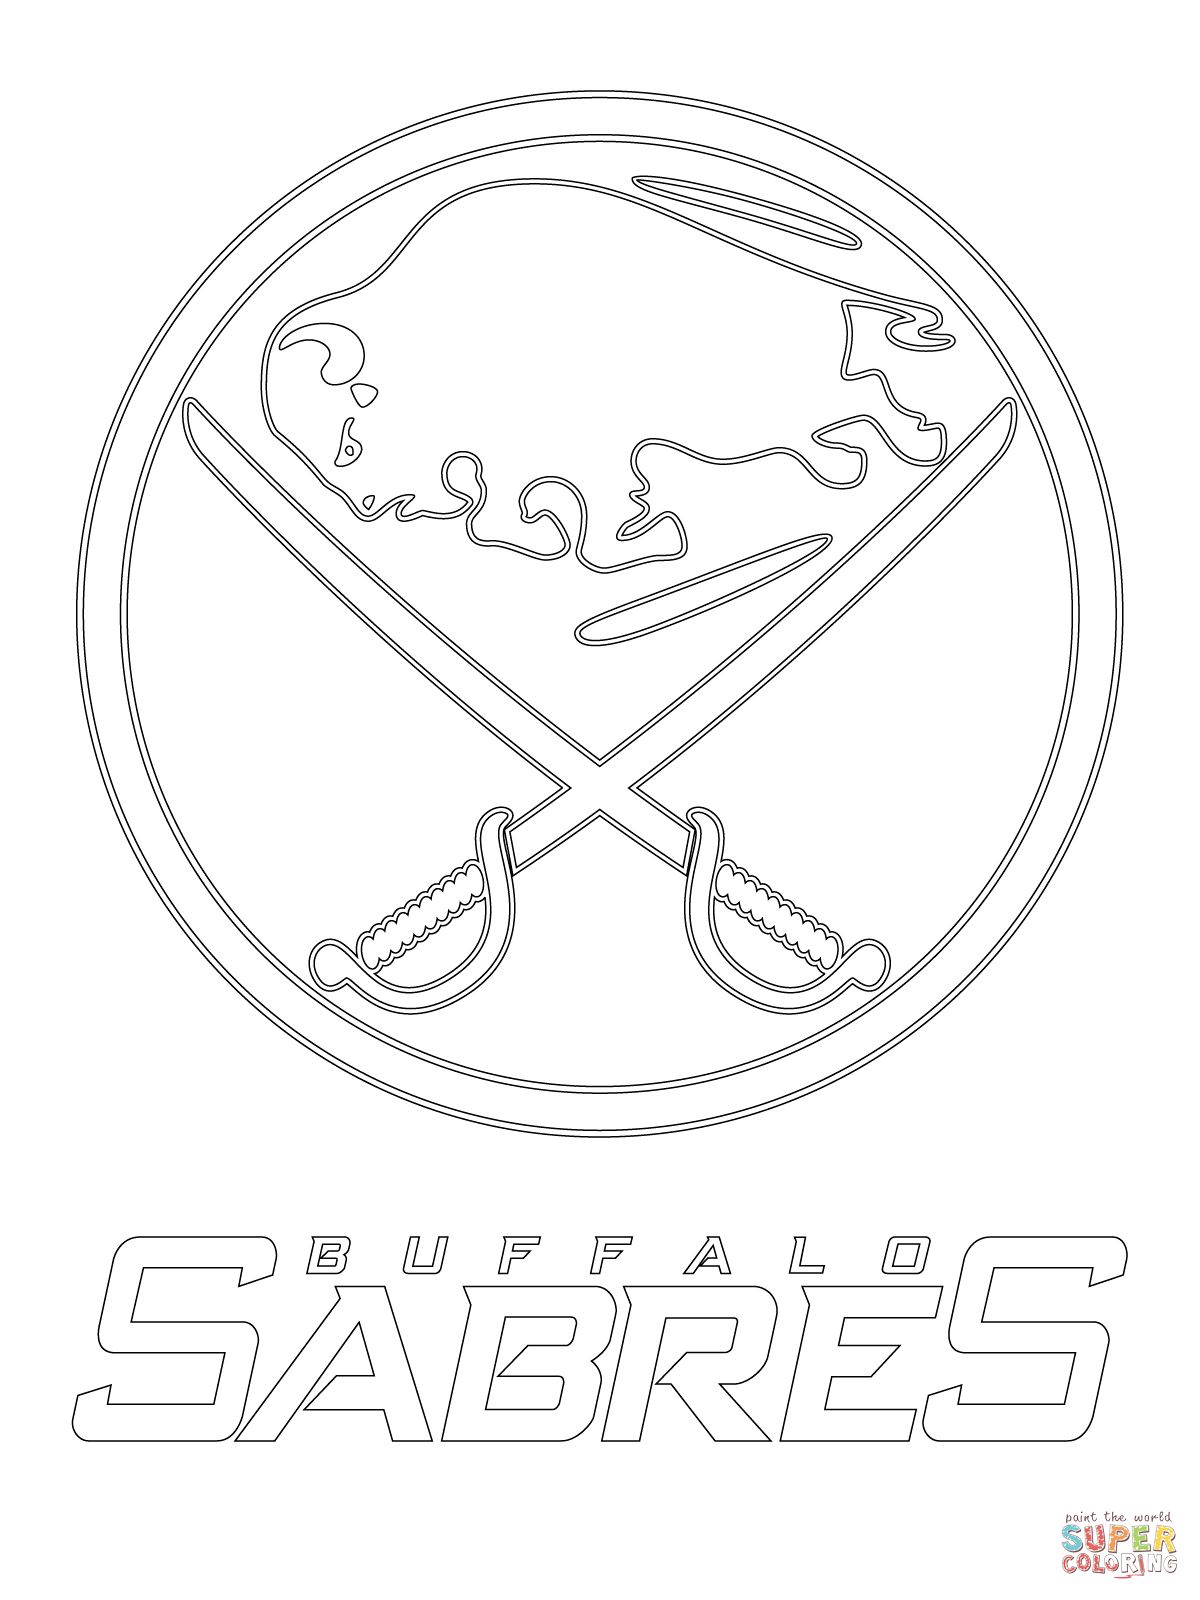 Buffalo Sabres Logo coloring page | Free Printable Coloring Pages